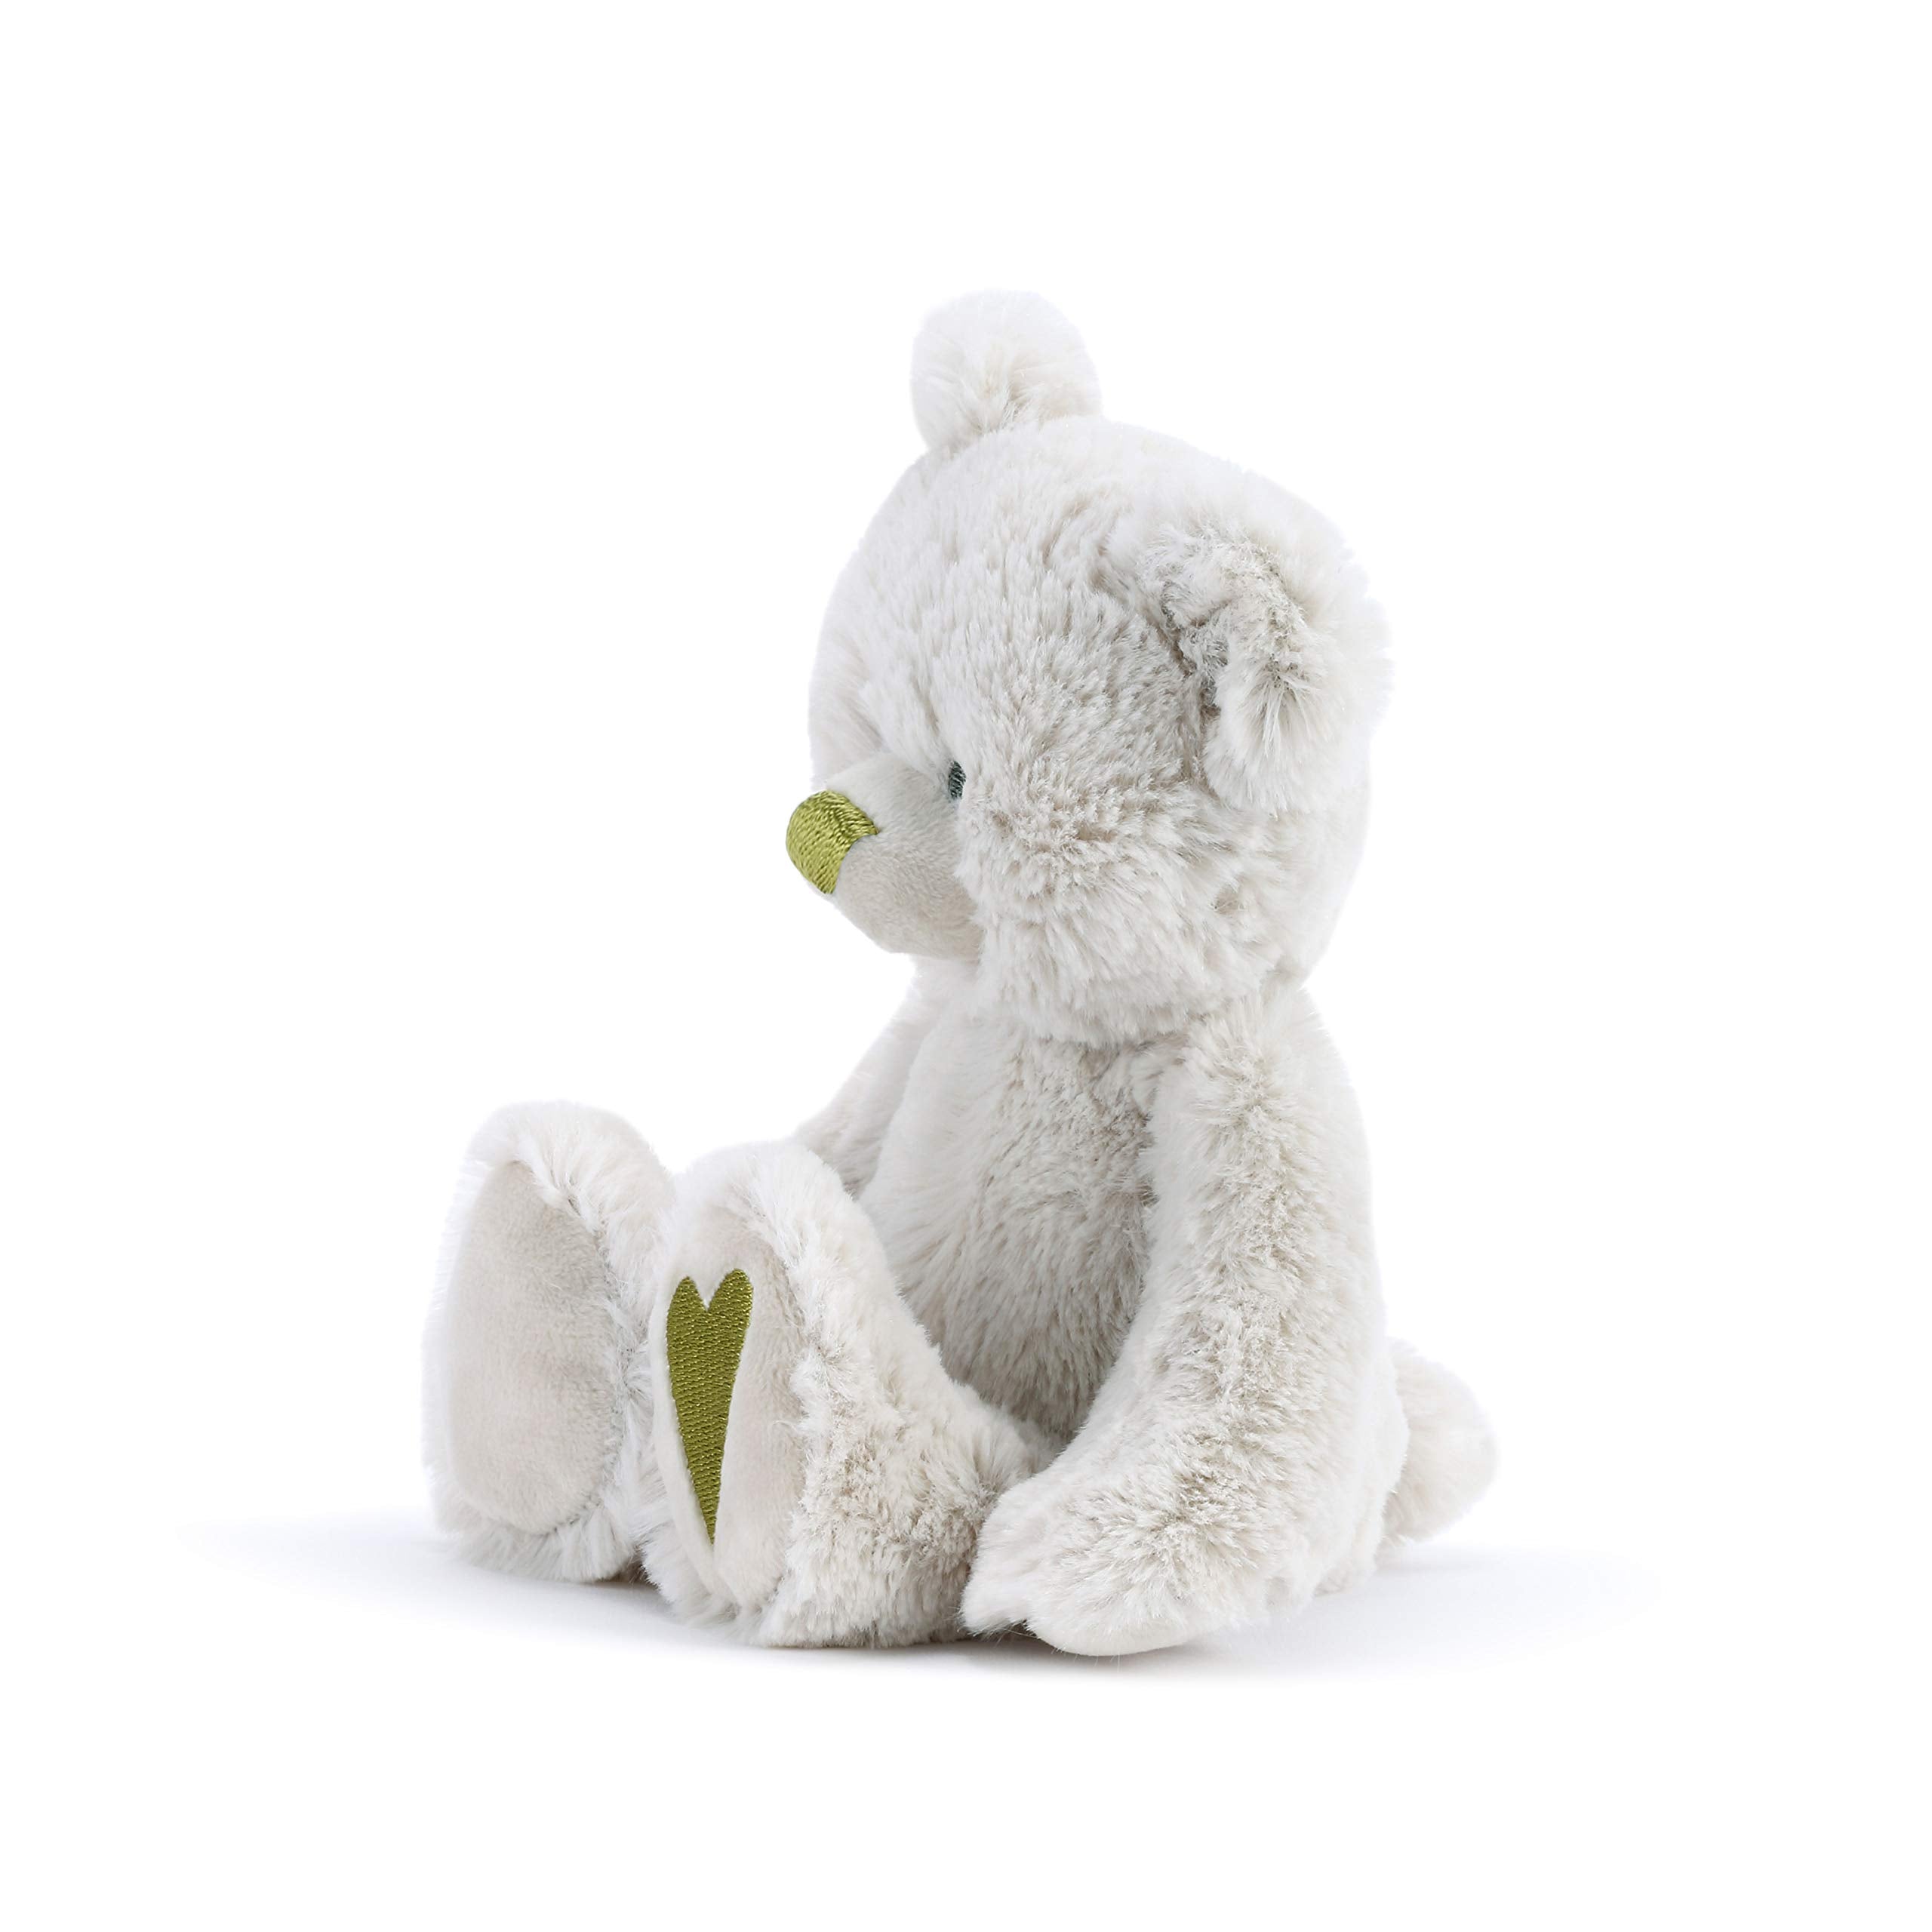 DEMDACO Brave Green Peridot Color August Birthstone 8.5 inch Children's Plush Stuffed Animal Toy